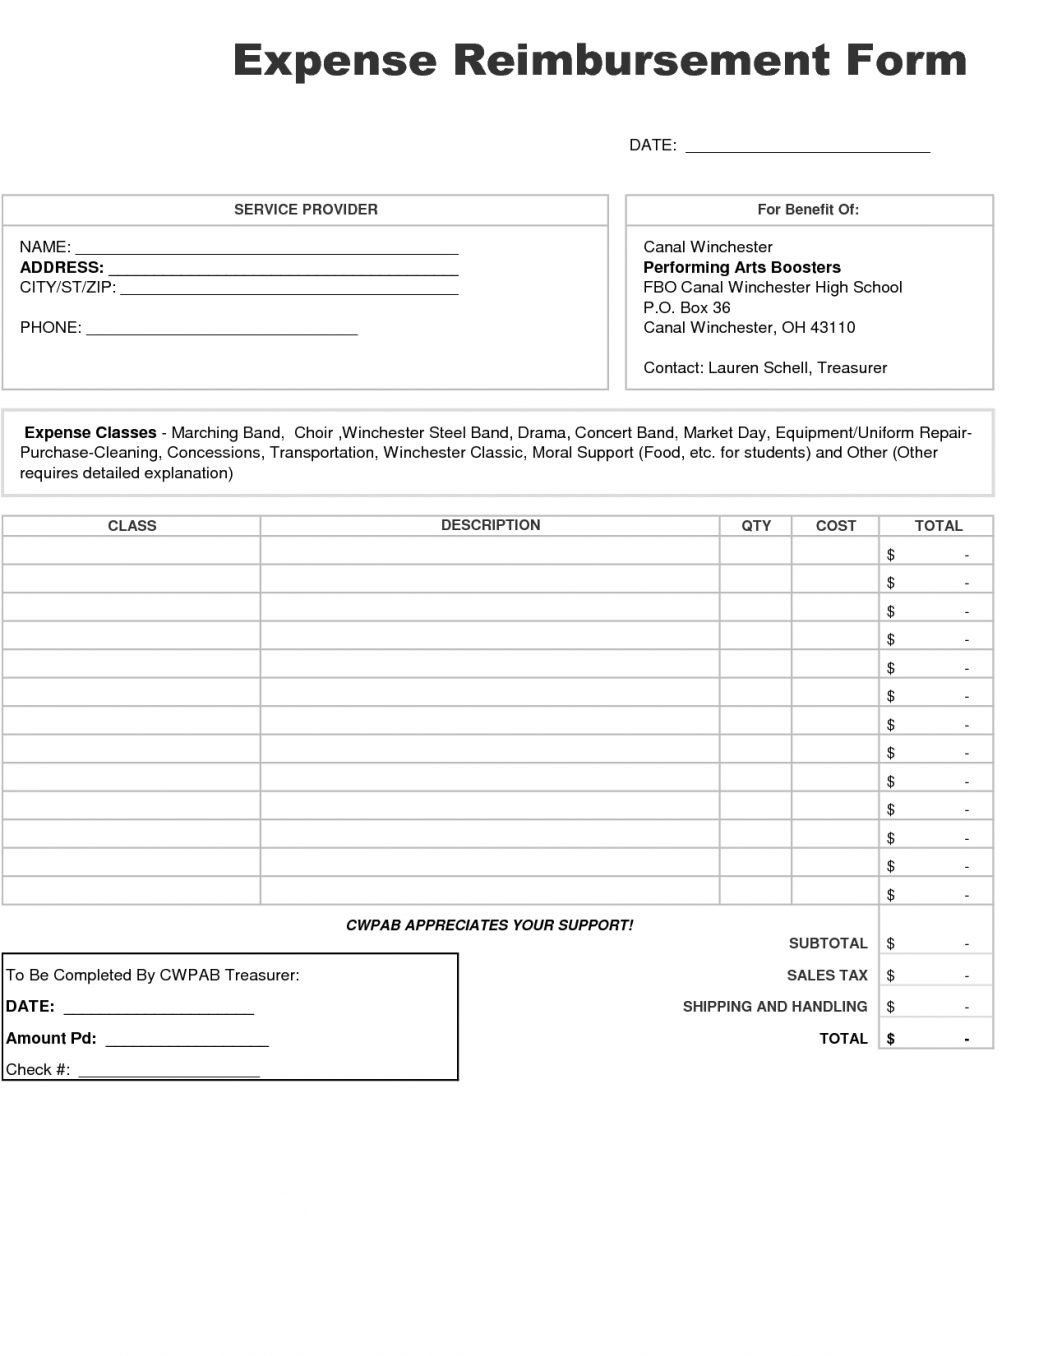 expense invoice template ideas sample reimbursement mbbtrafo invoice for reimbursement